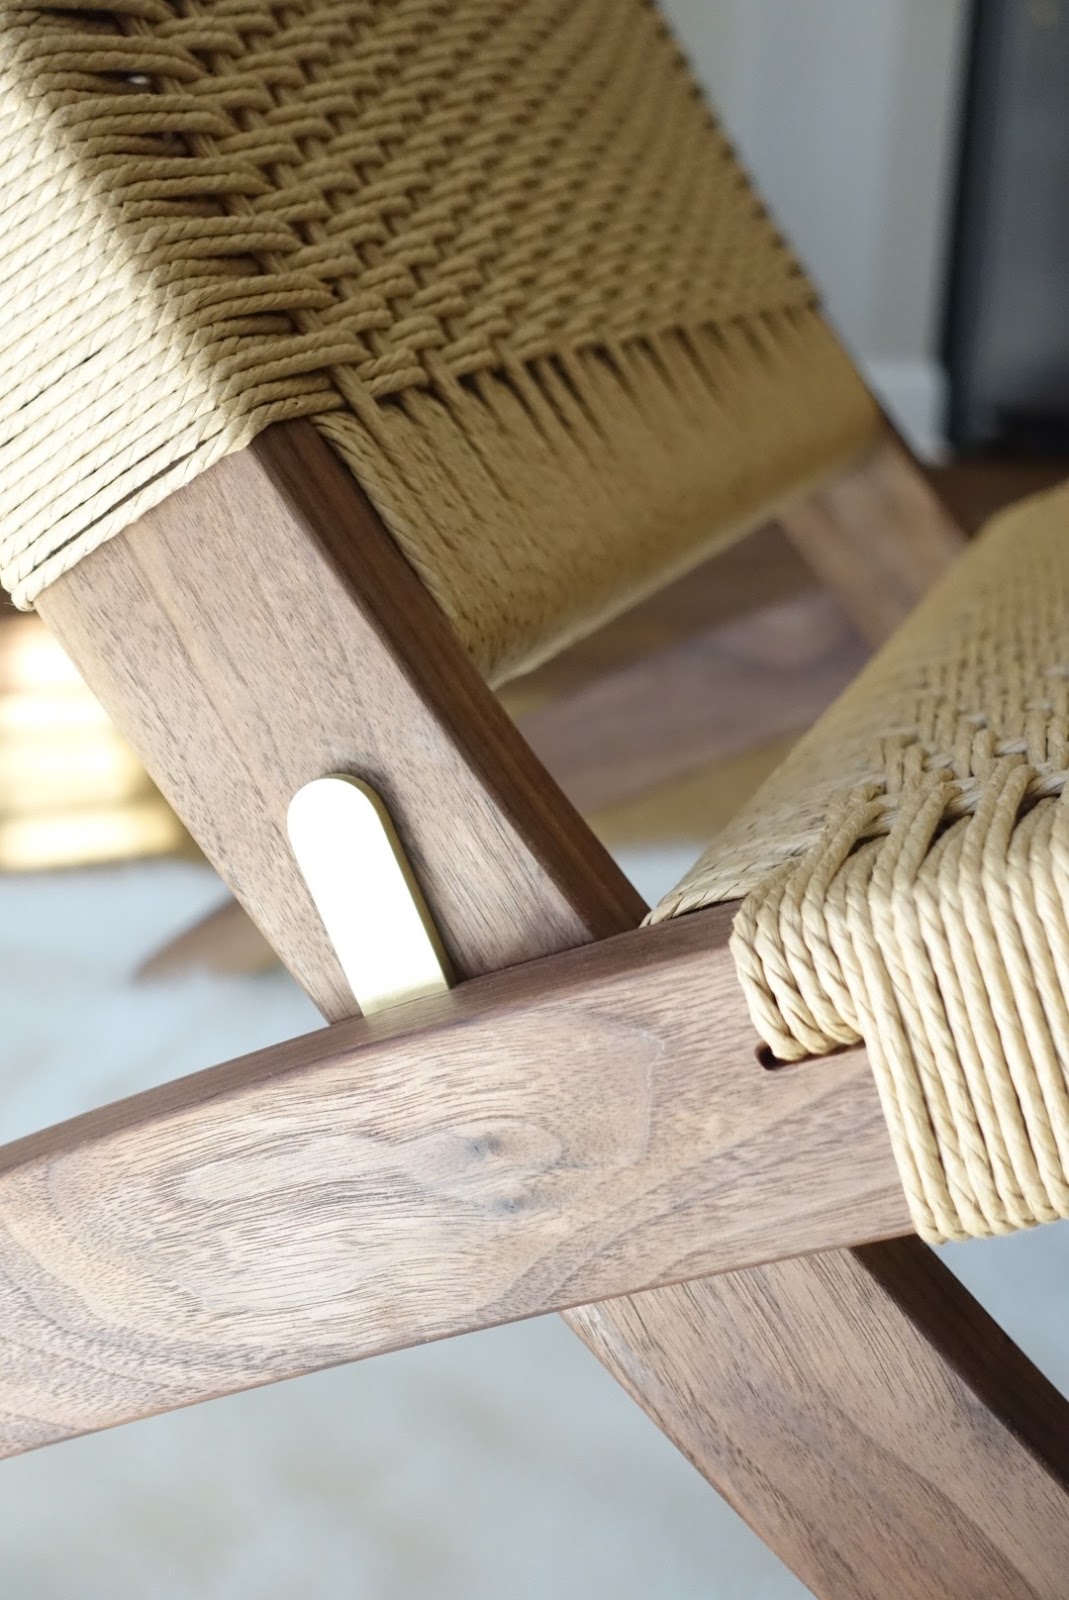 Caleb James Chairmaker Planemaker: Danish Modern Lounge Chairmaking Classes  - Learn to Weave Danish Cord